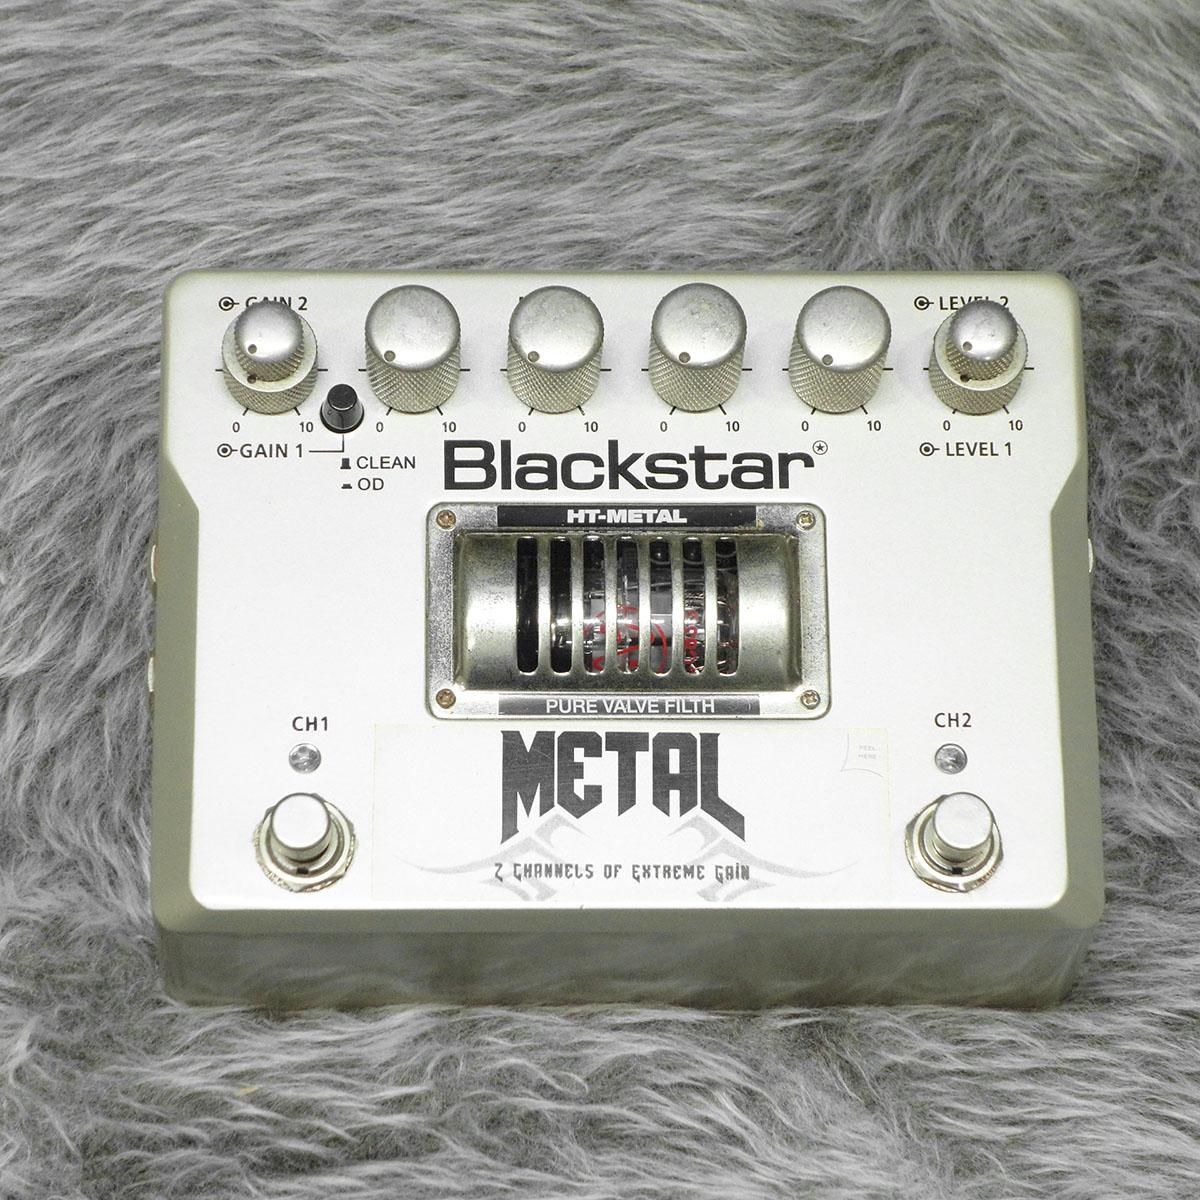 blackstar HT-METAL